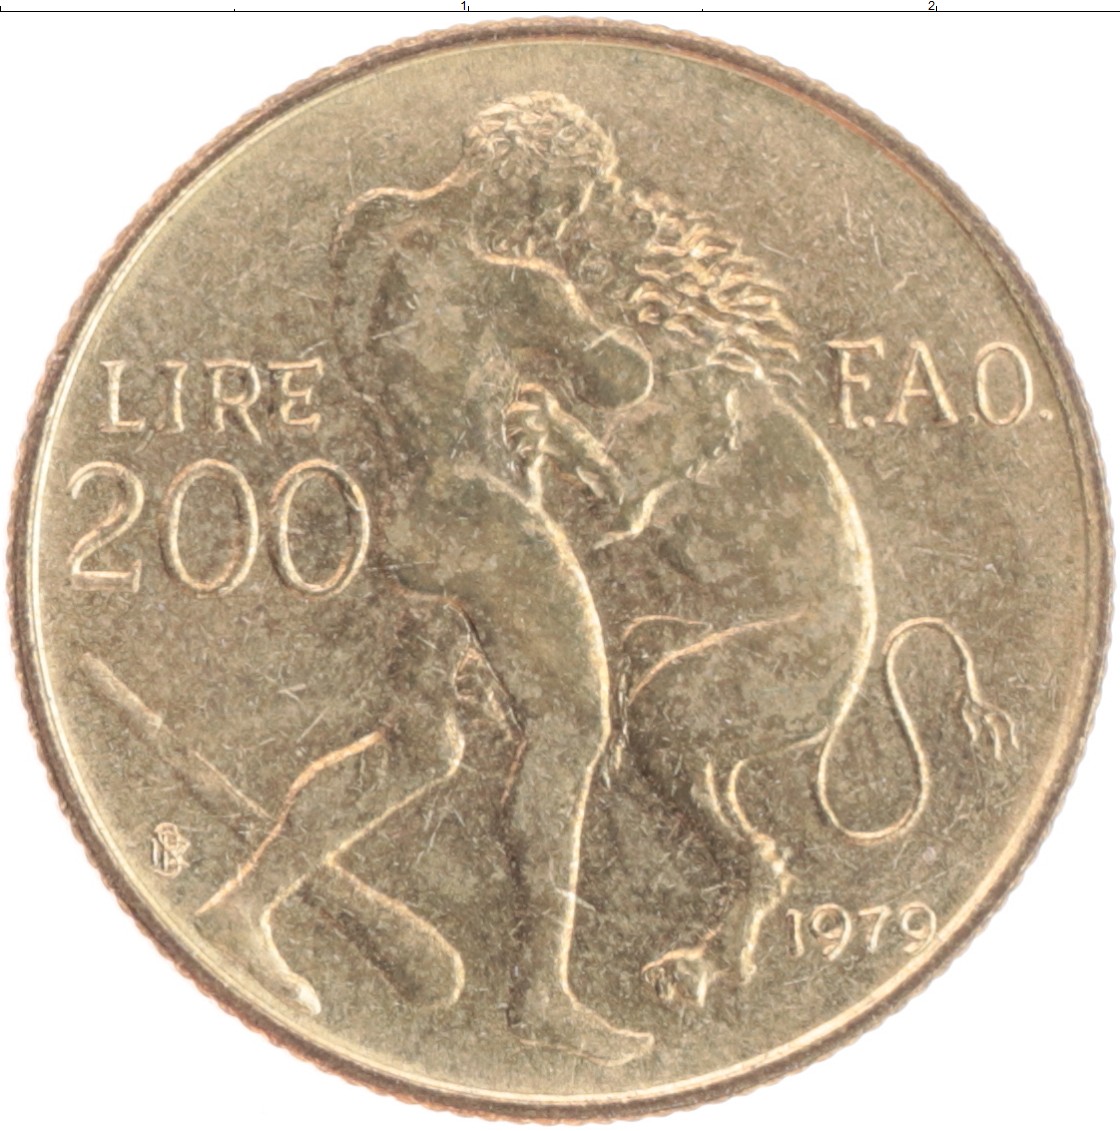 280 лир в рублях. Монета с изображением Лиры. 200 Лир в лари. Монета Сан Марино 2 2002 золото. 200 Лир в рублях.